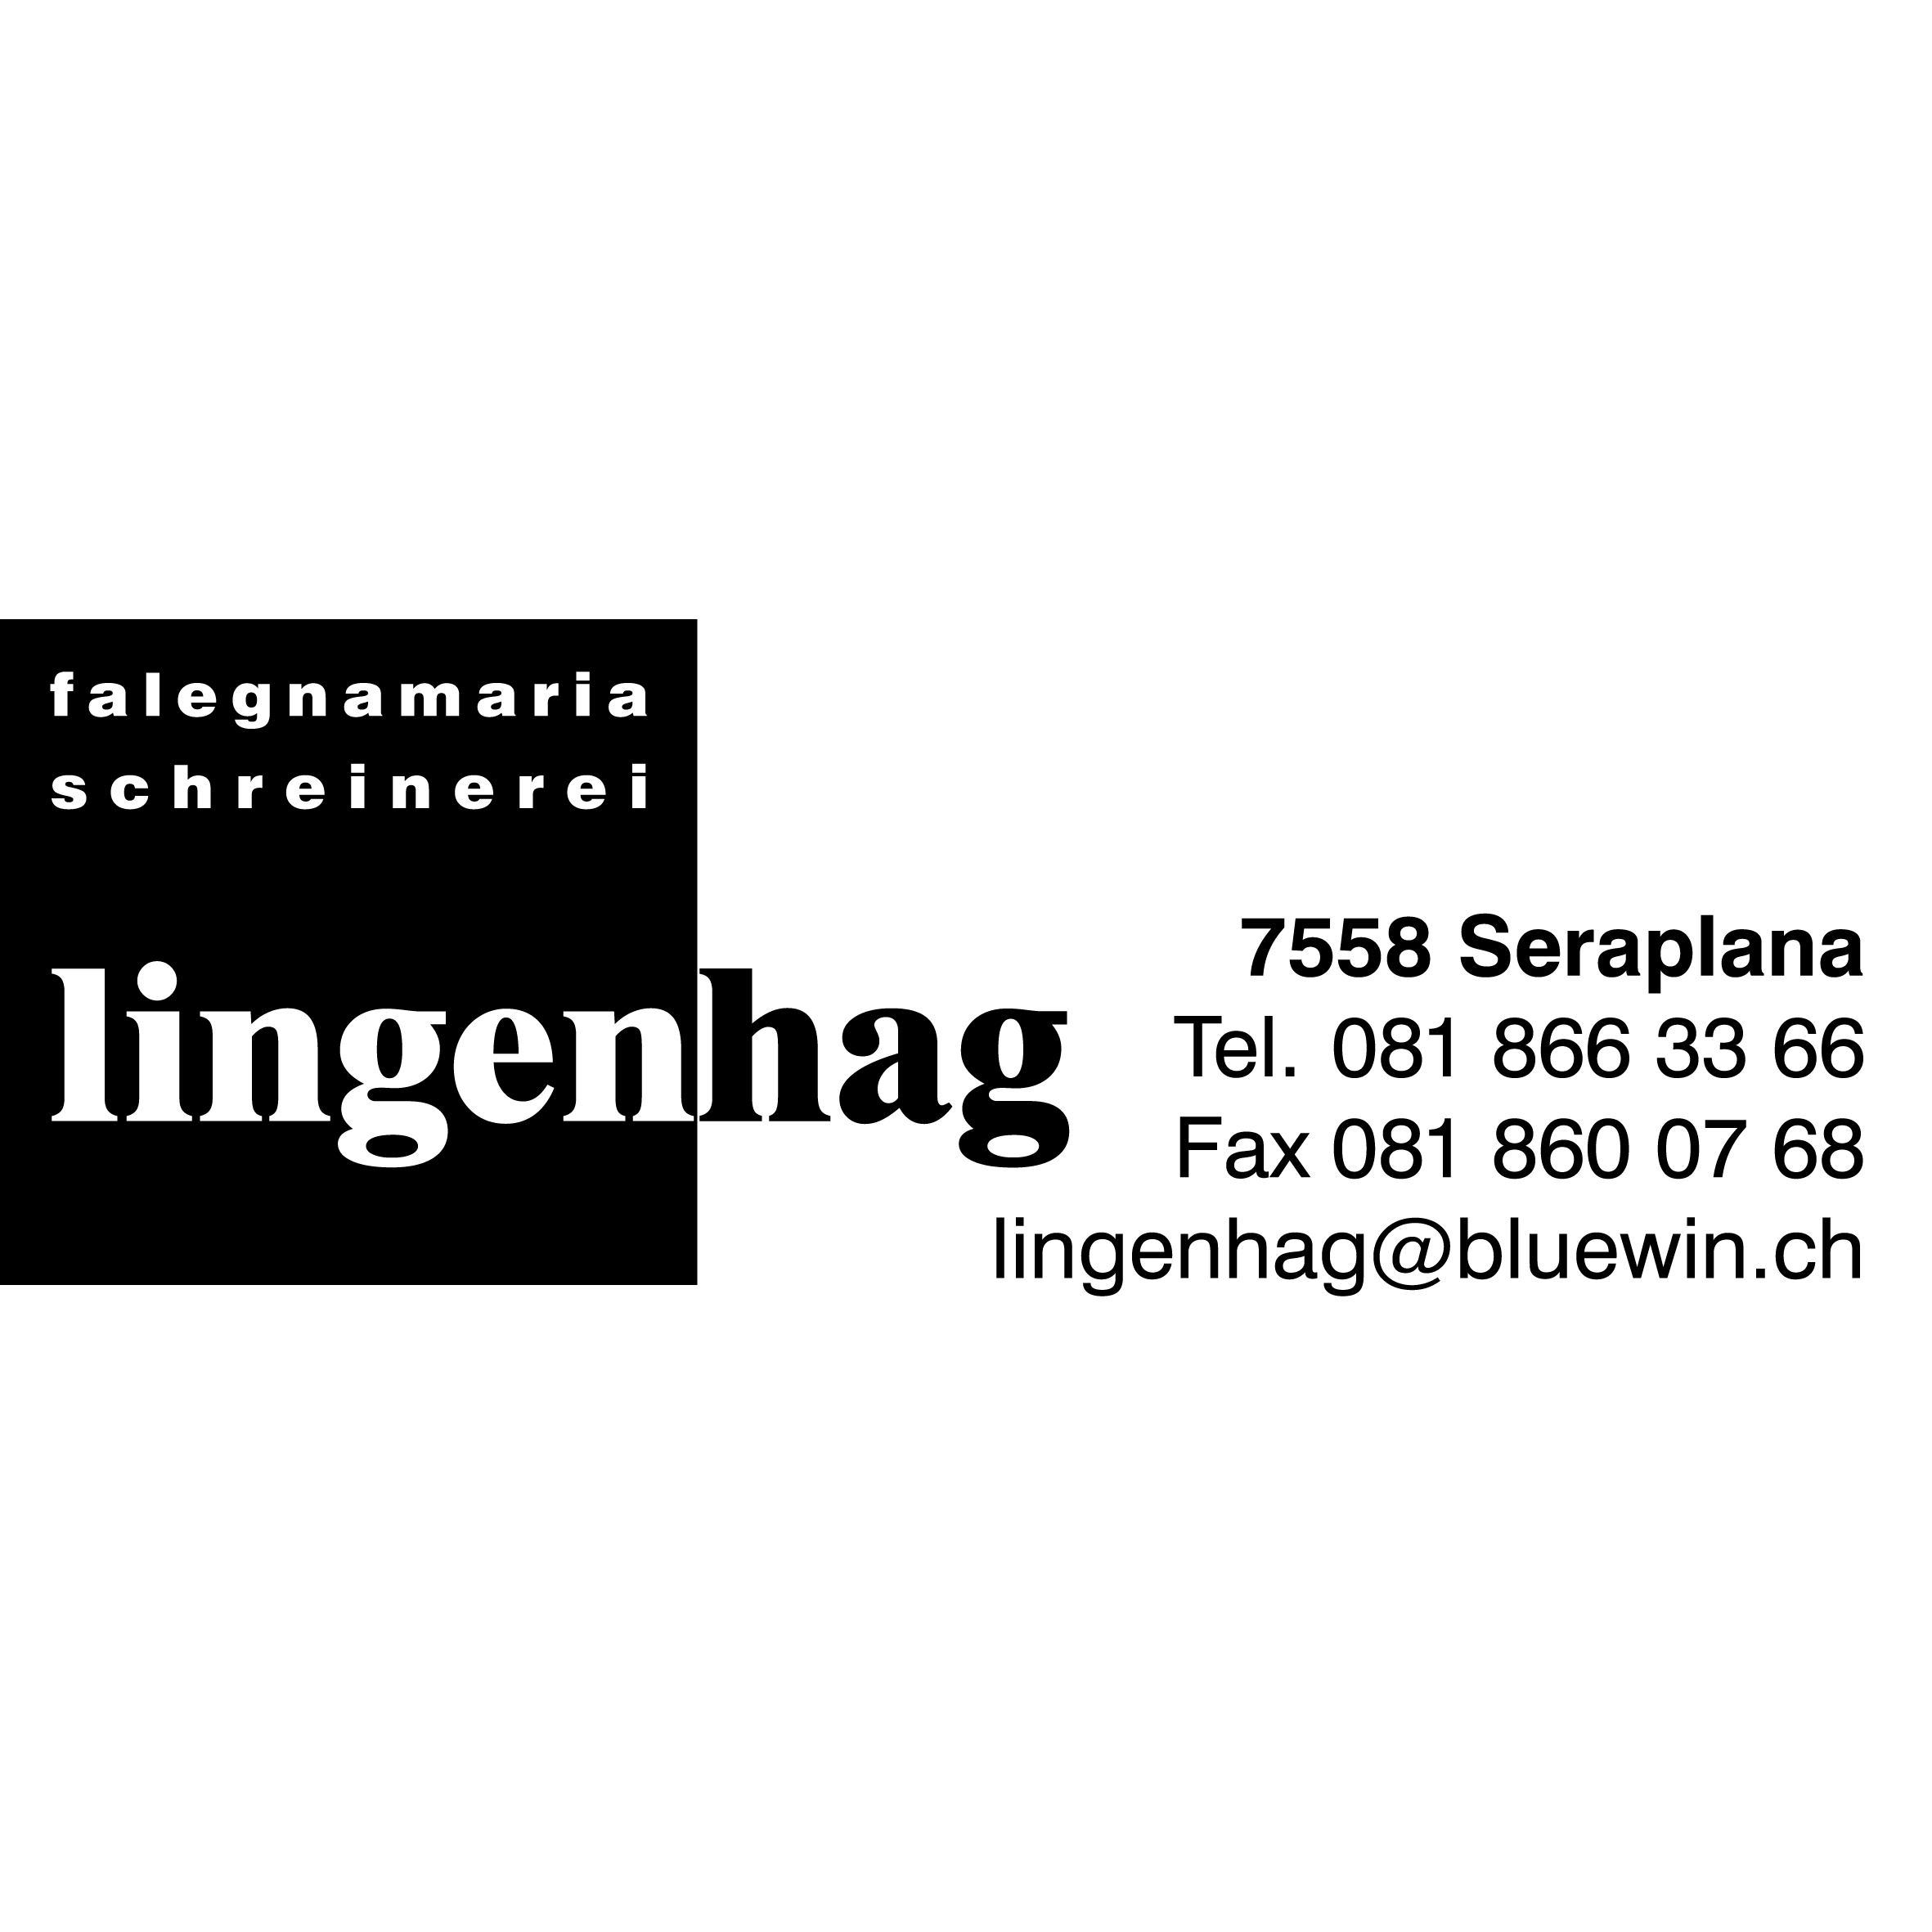 Schreinerei-Lingenhag Logo